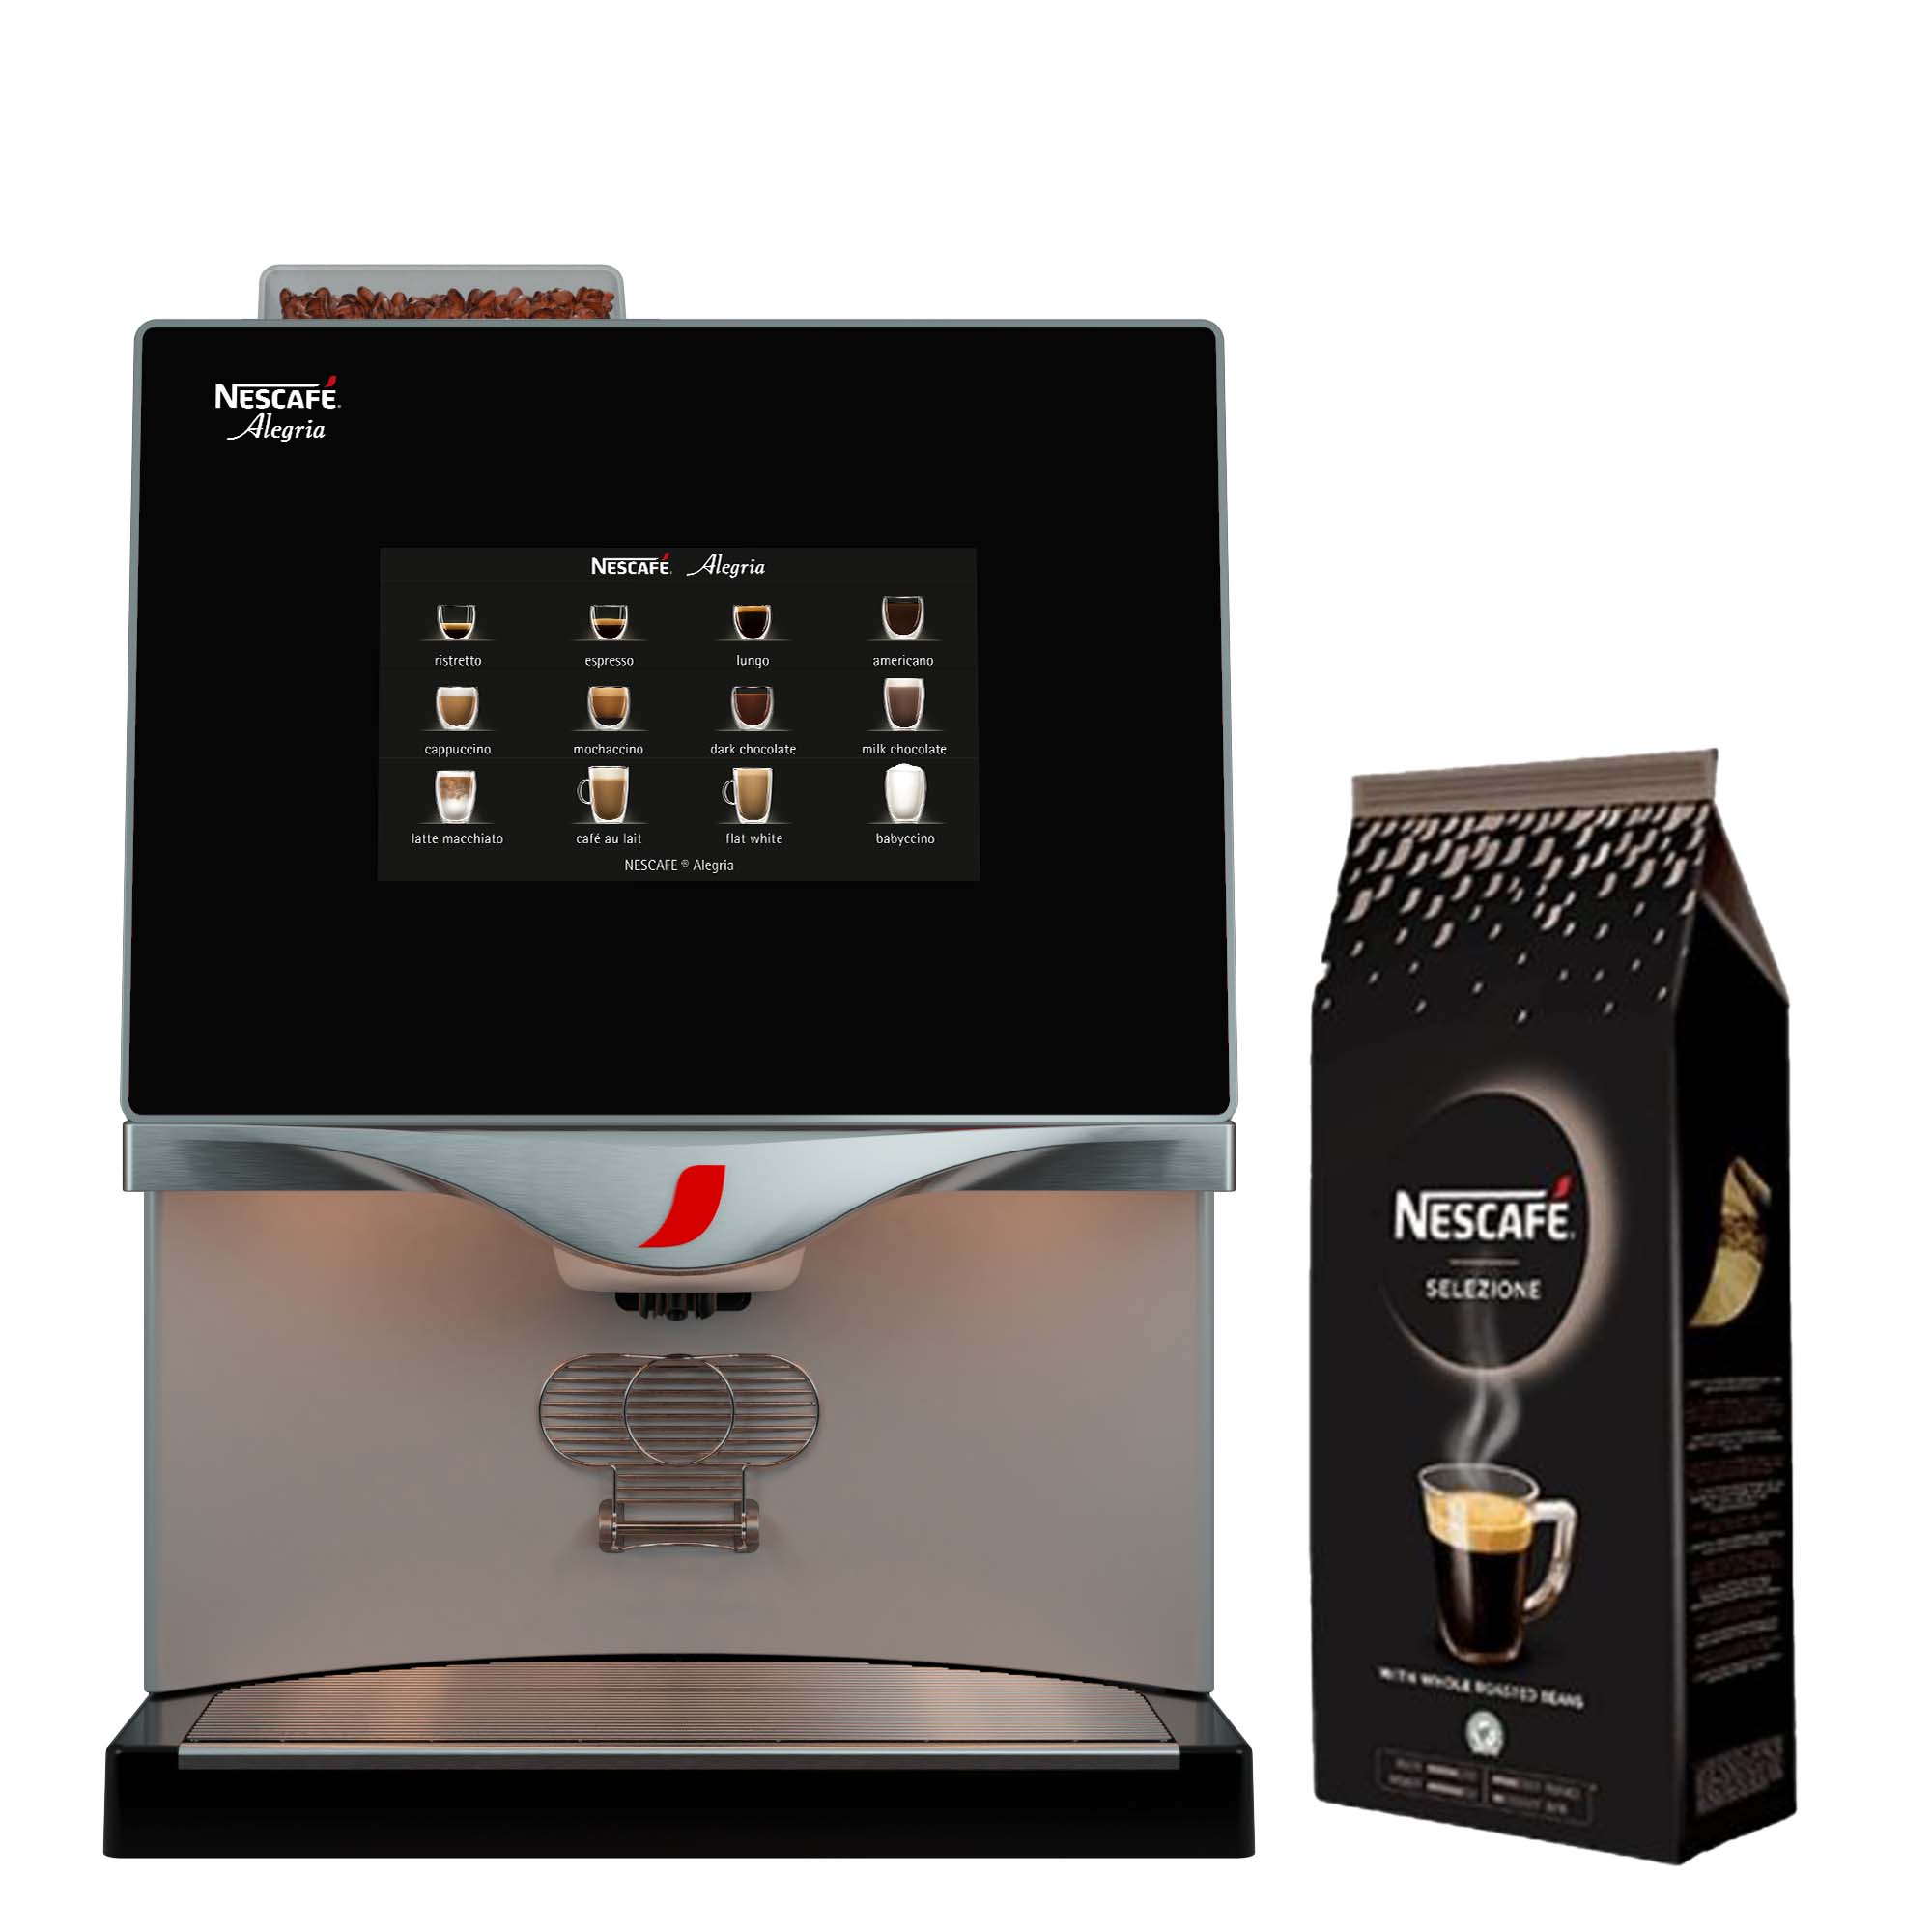 Top Nestlé Commercial Coffee Machines 2022